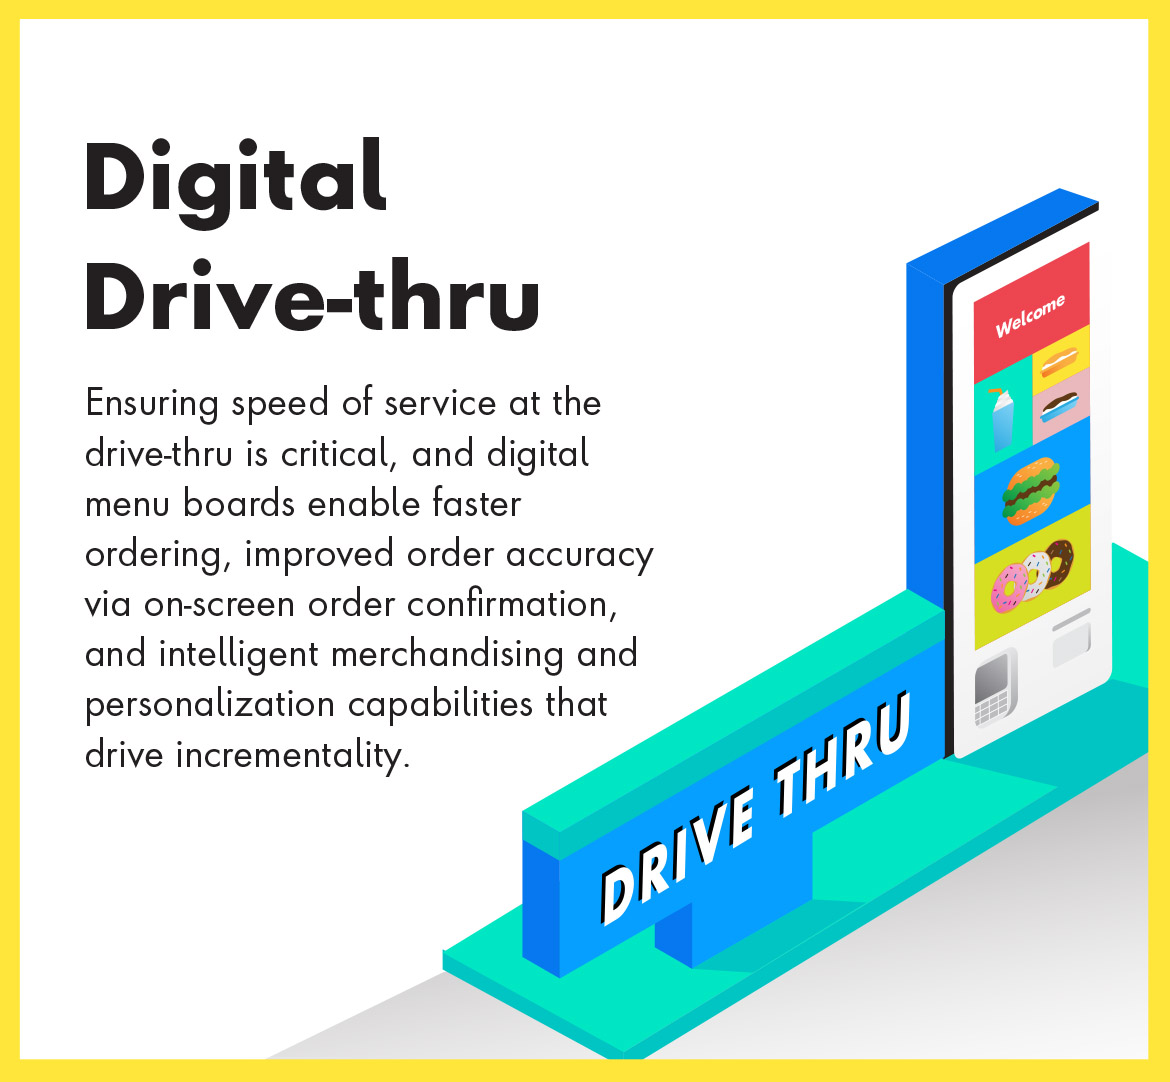 Digital Drive-thru